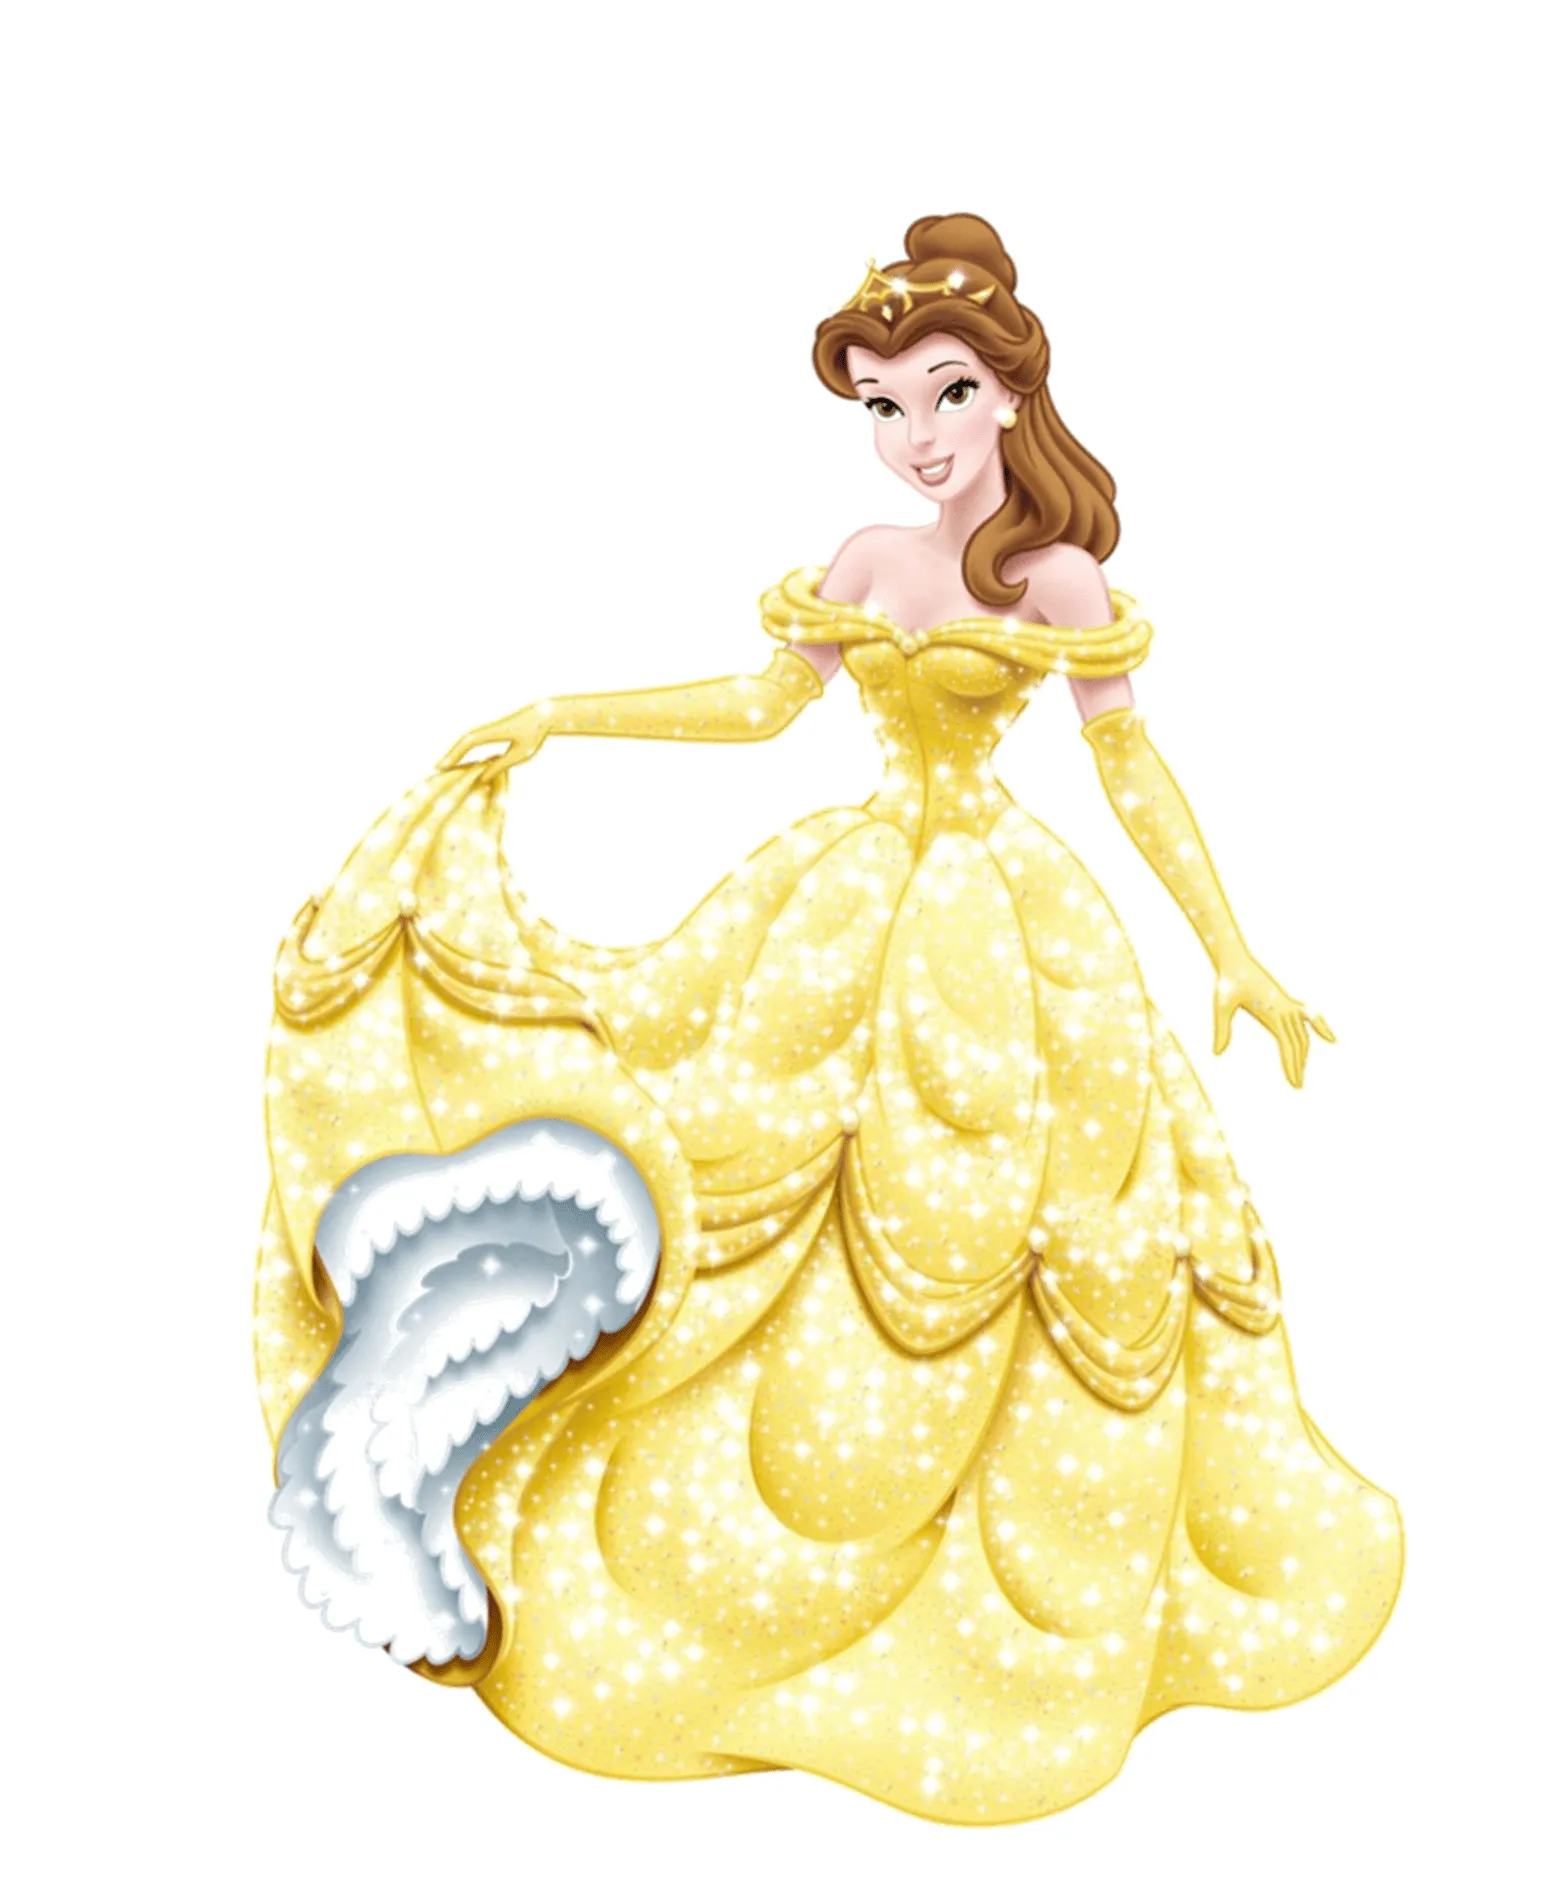 User blog:Ratigan6688/How I Rank The Disney Princesses - DisneyWiki